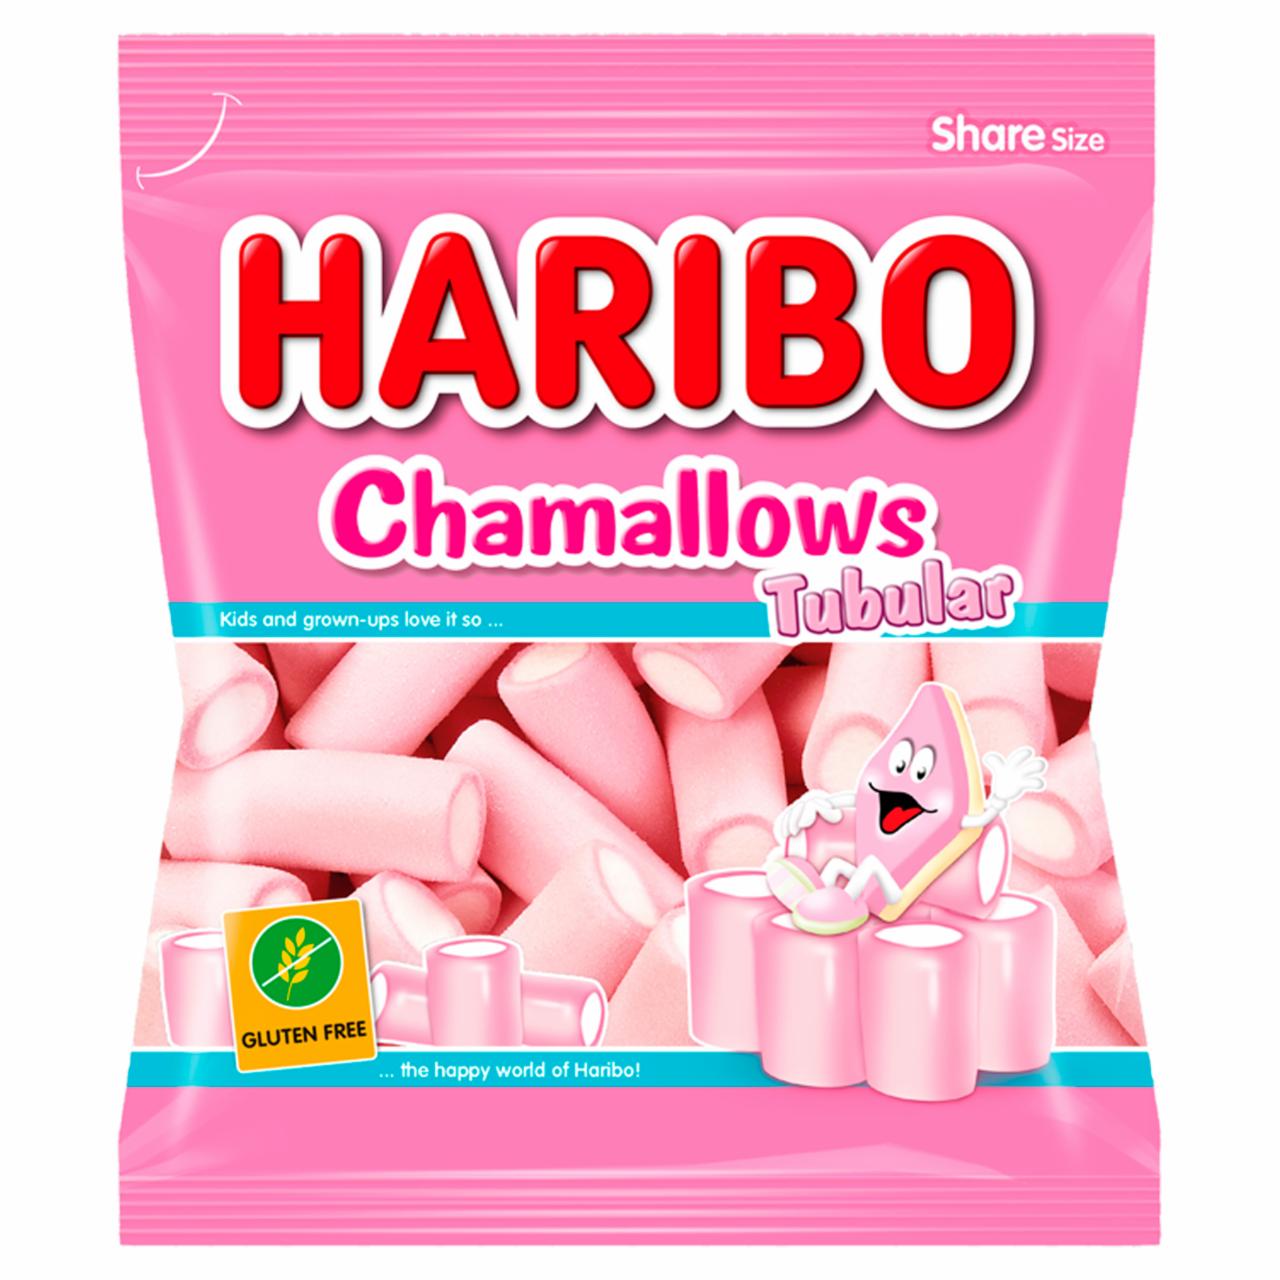 Képek - Haribo Chamallows Tubular habcukorka 90 g